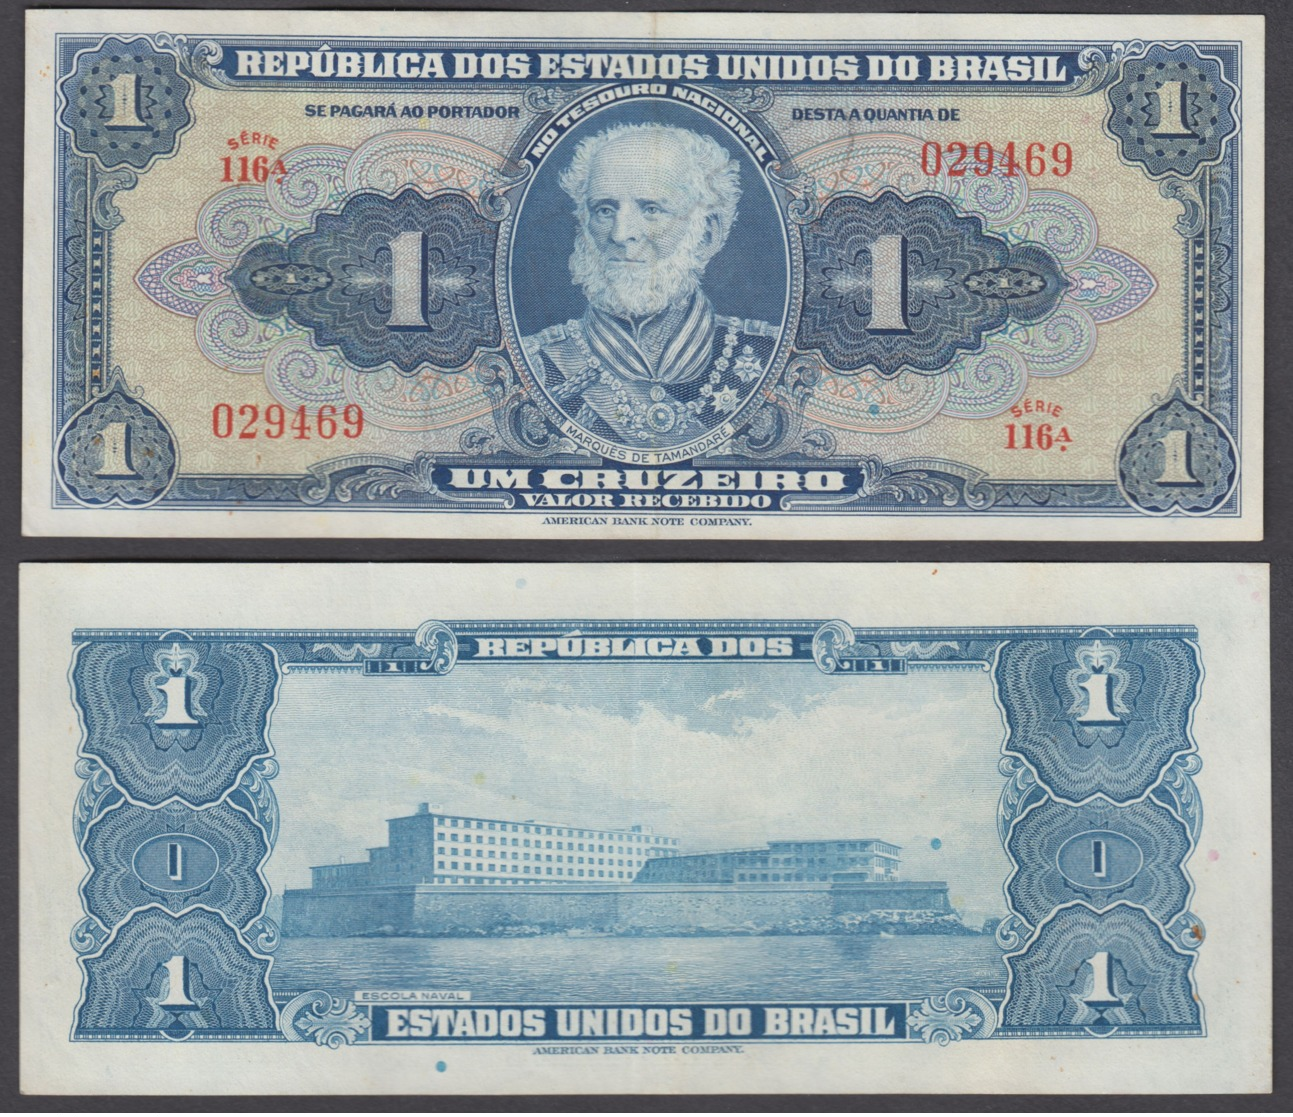 Brazil 1 Cruzeiro ND 1944 (VF+) Condition Banknote P-132 Series 116A - Brazil